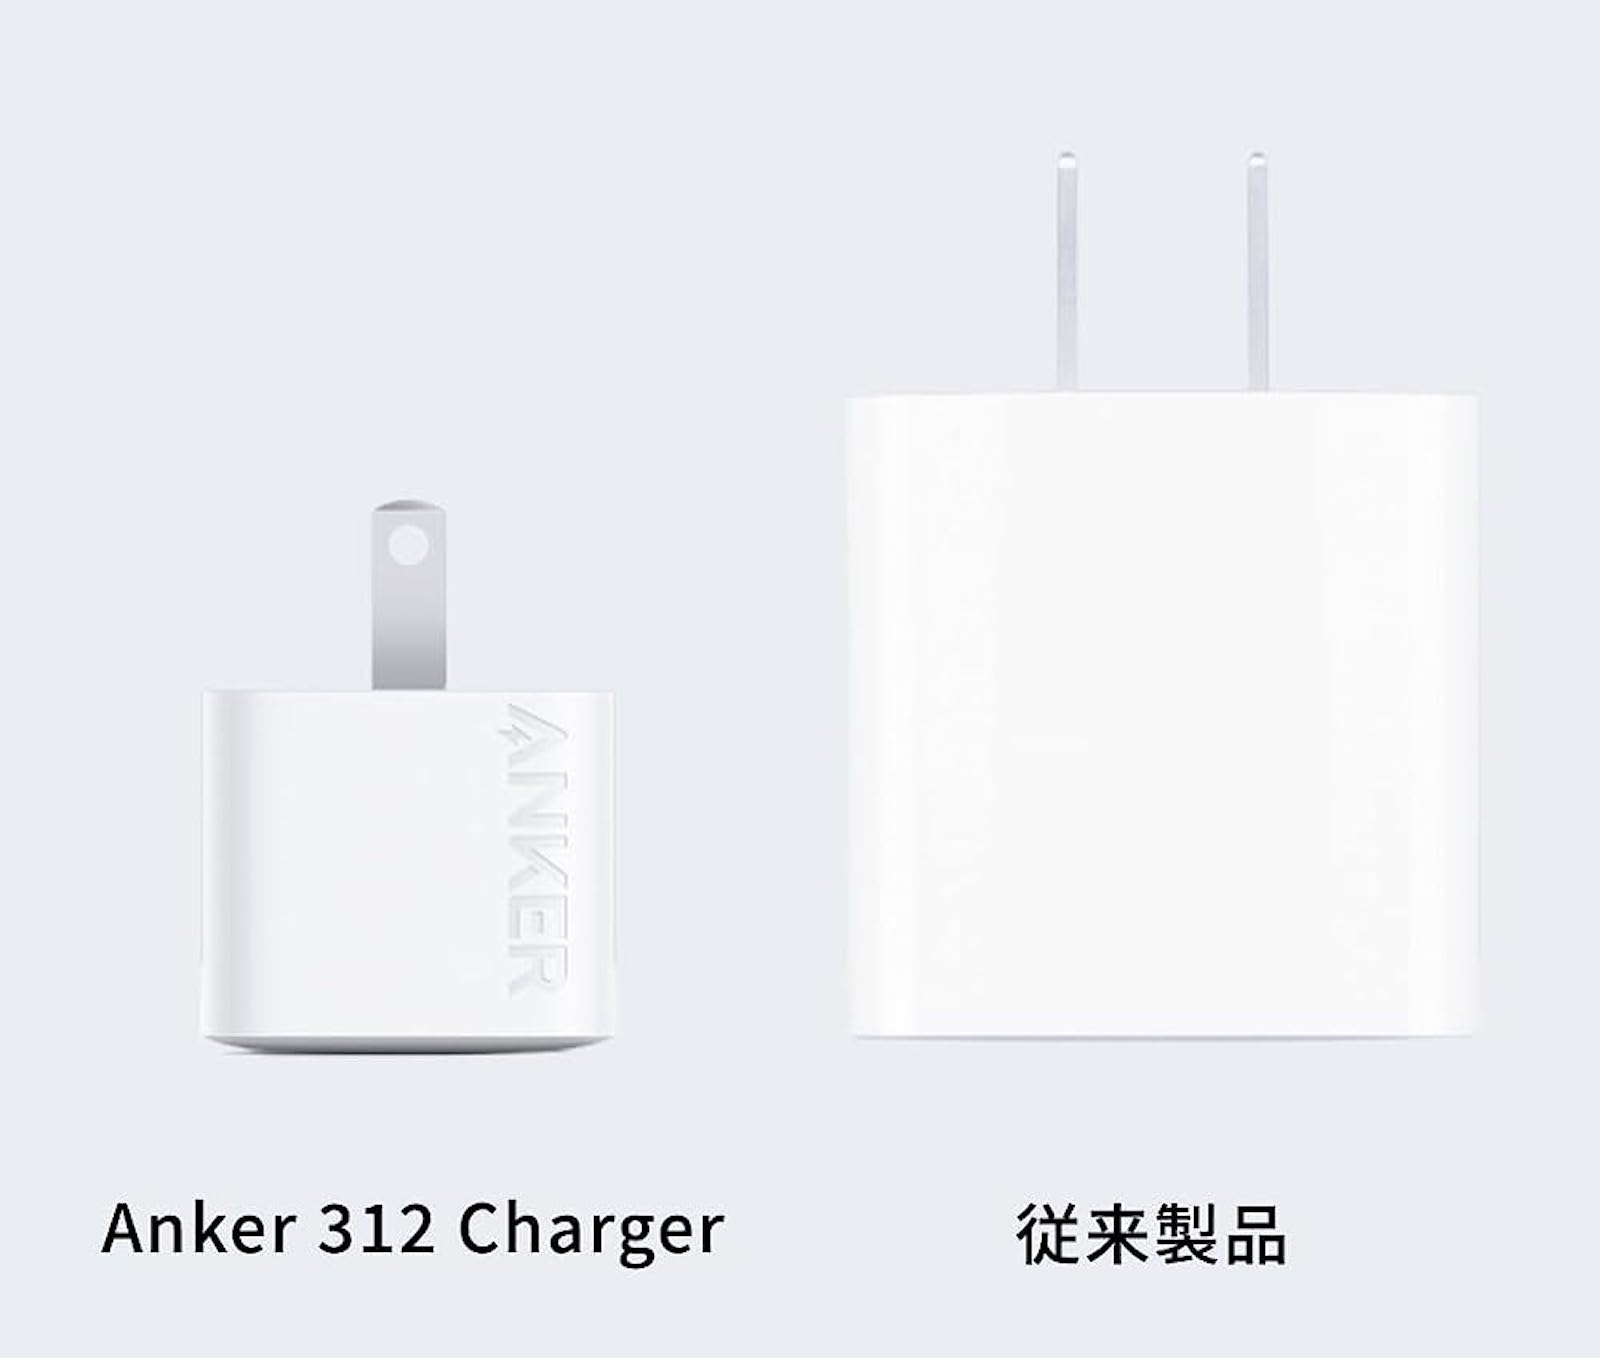 Anker-312-charger-comparison.jpg